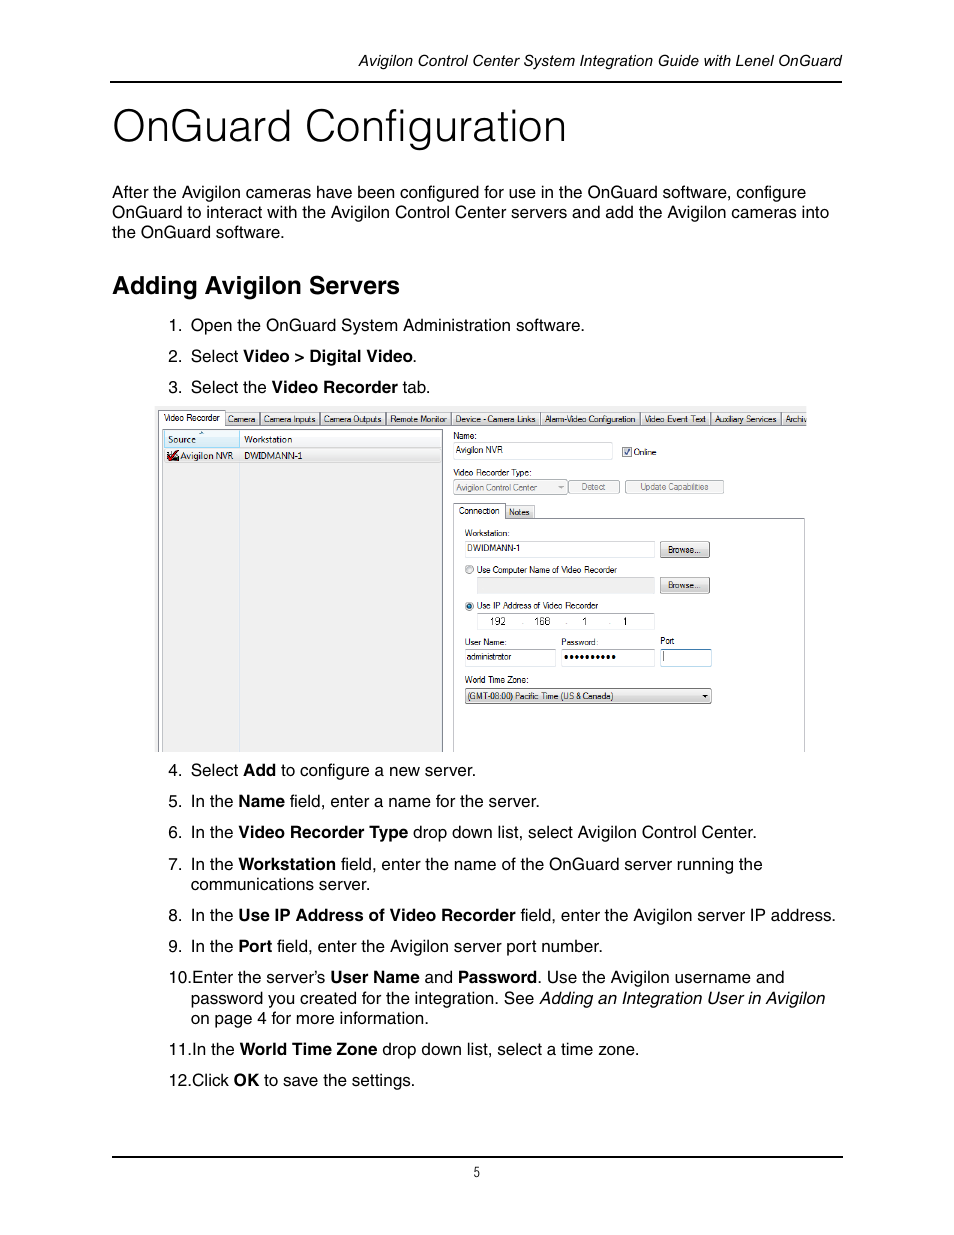 Onguard configuration, Adding avigilon servers | Avigilon Lenel On